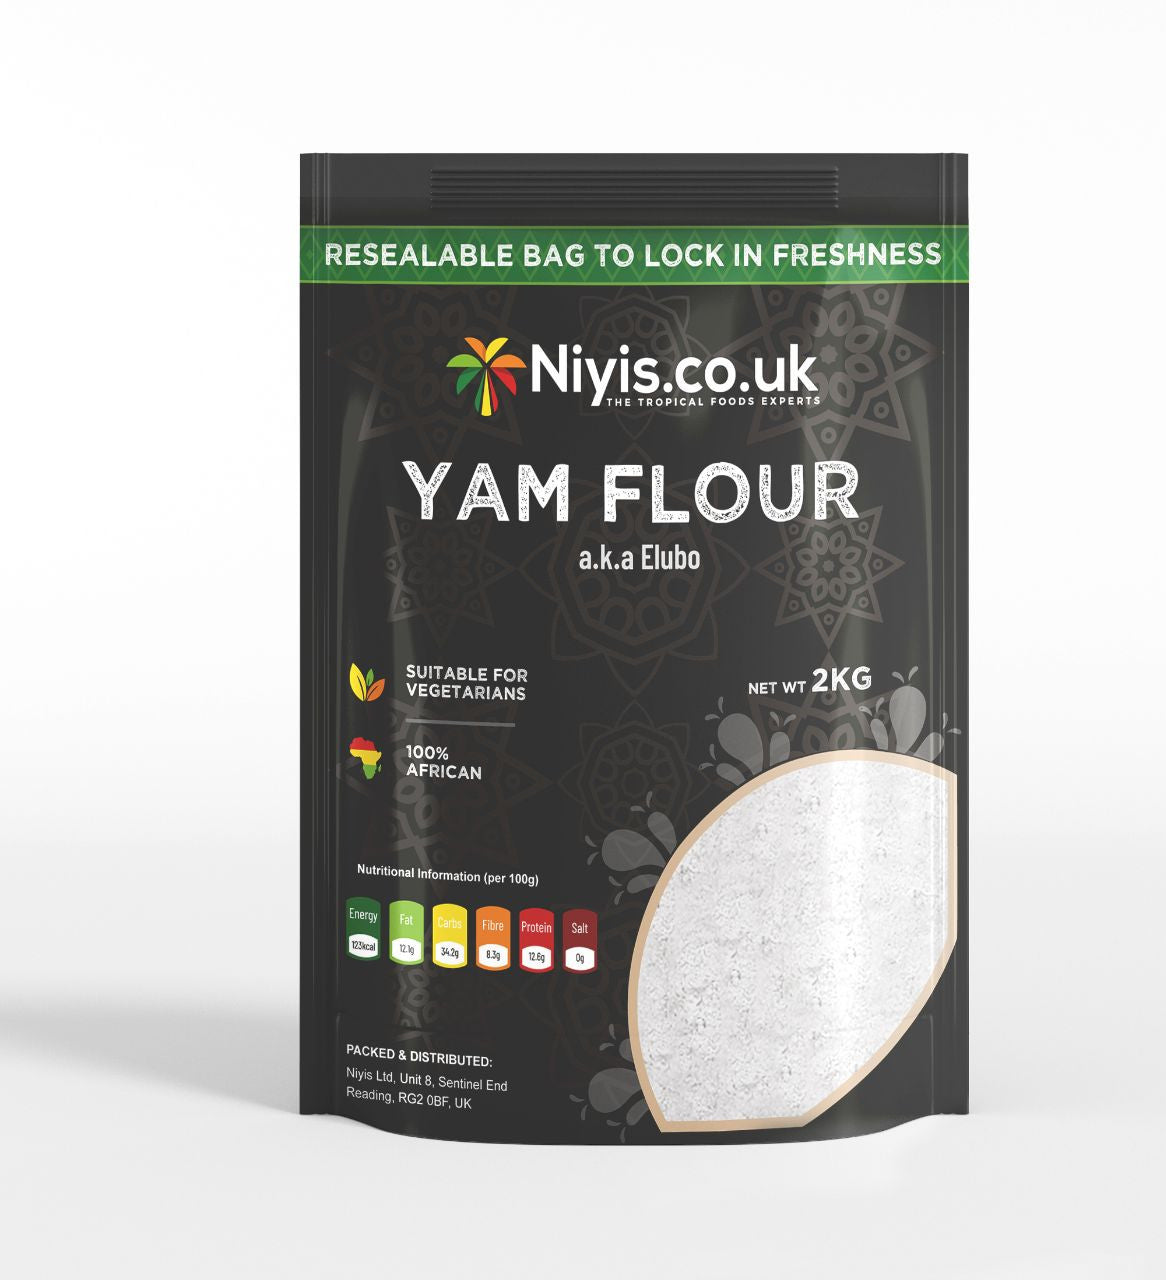 Yam flour sold on Niyis